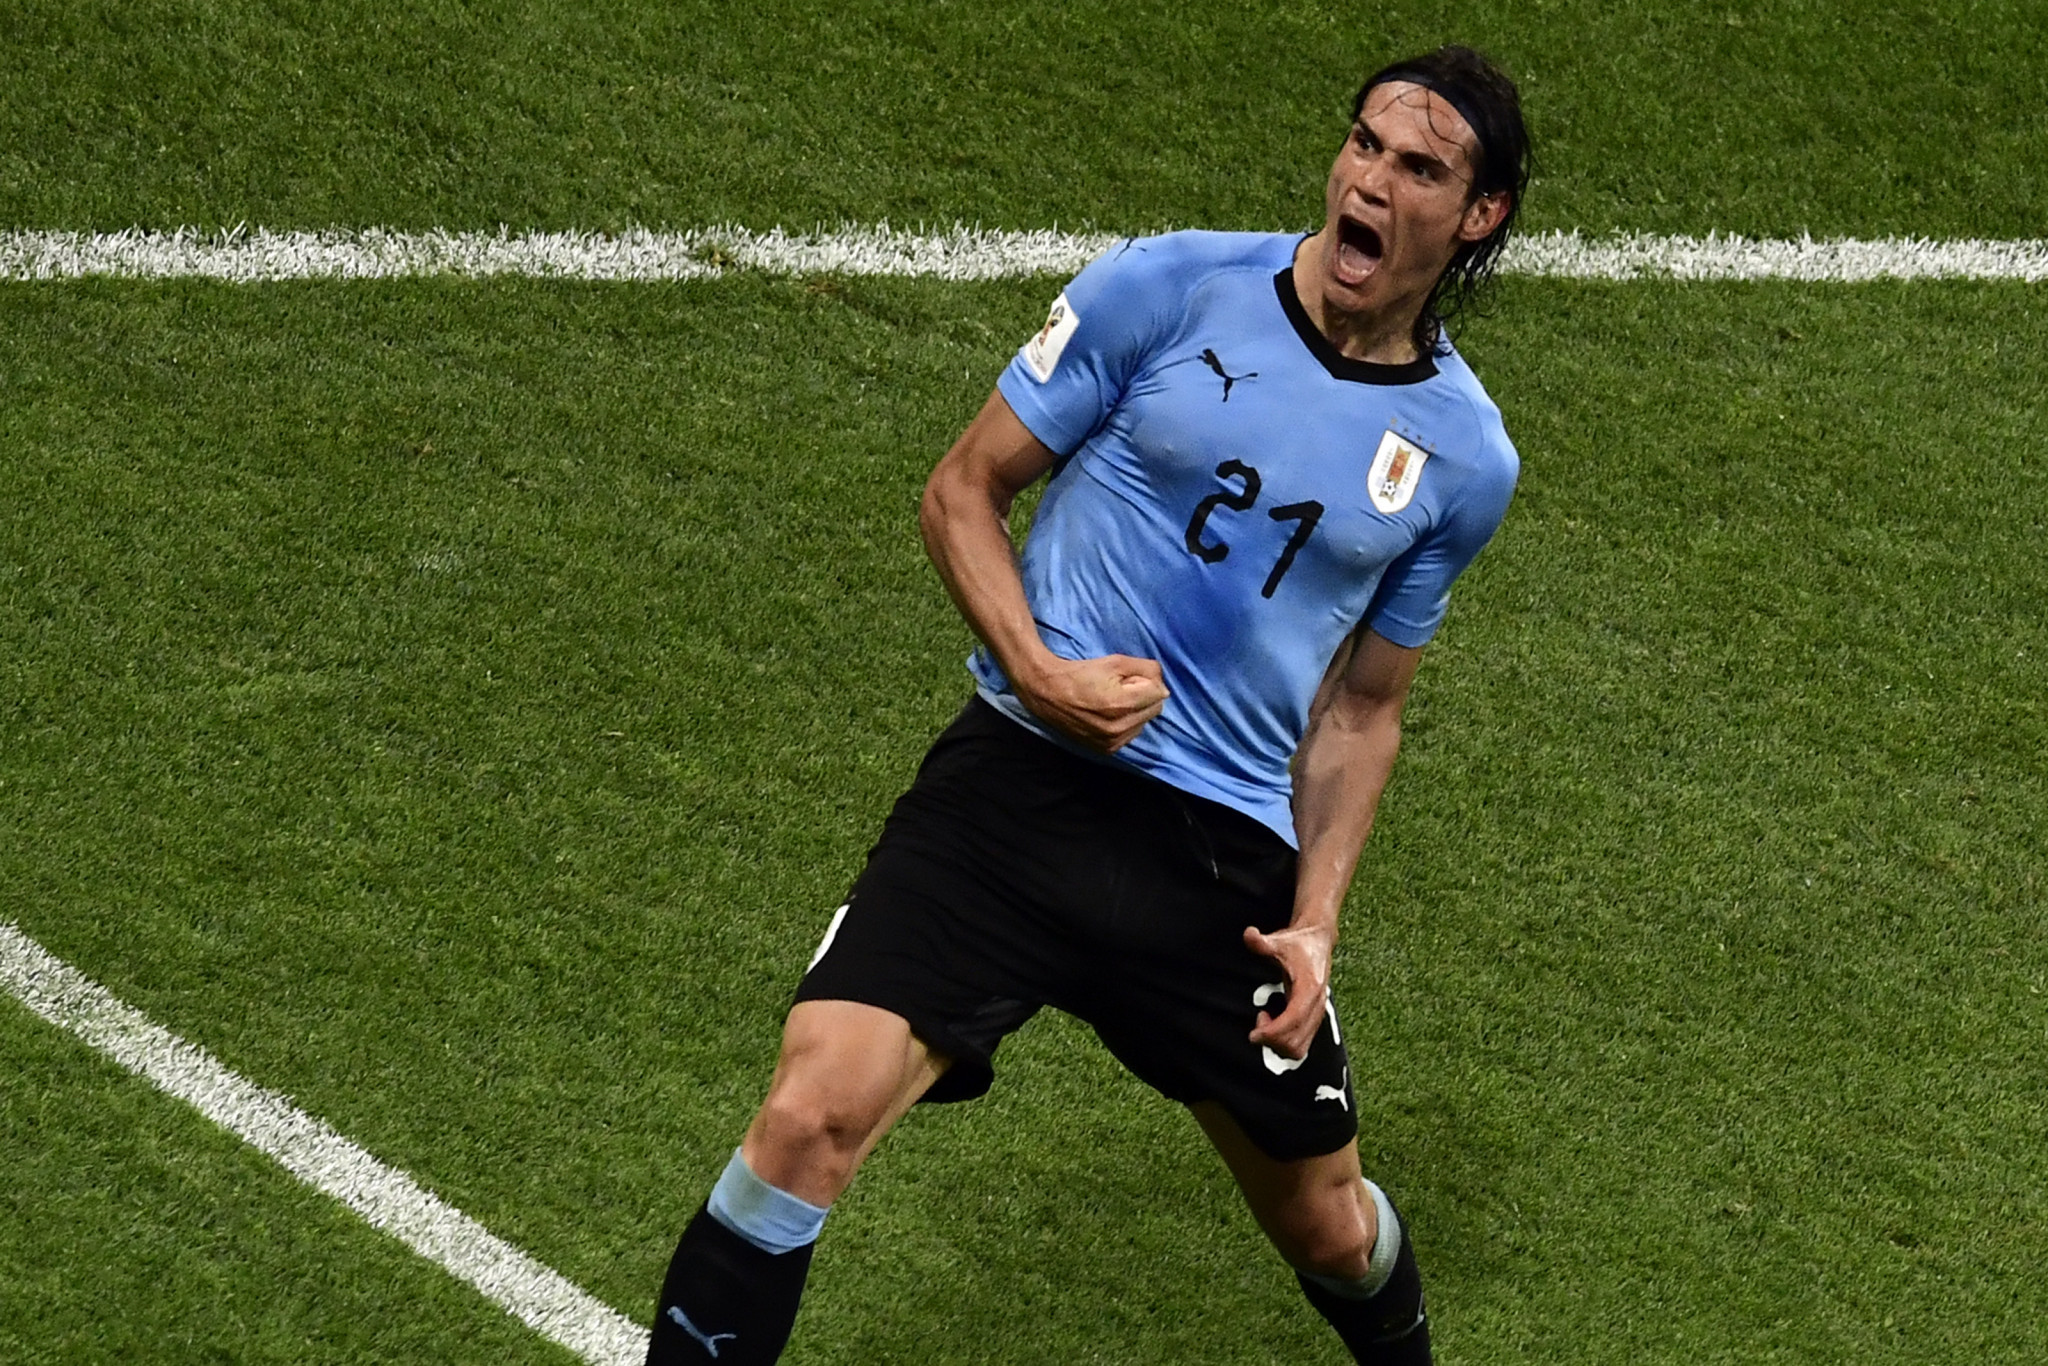 Edinson Cavani starred for Uruguay against Portugal ©Getty Images